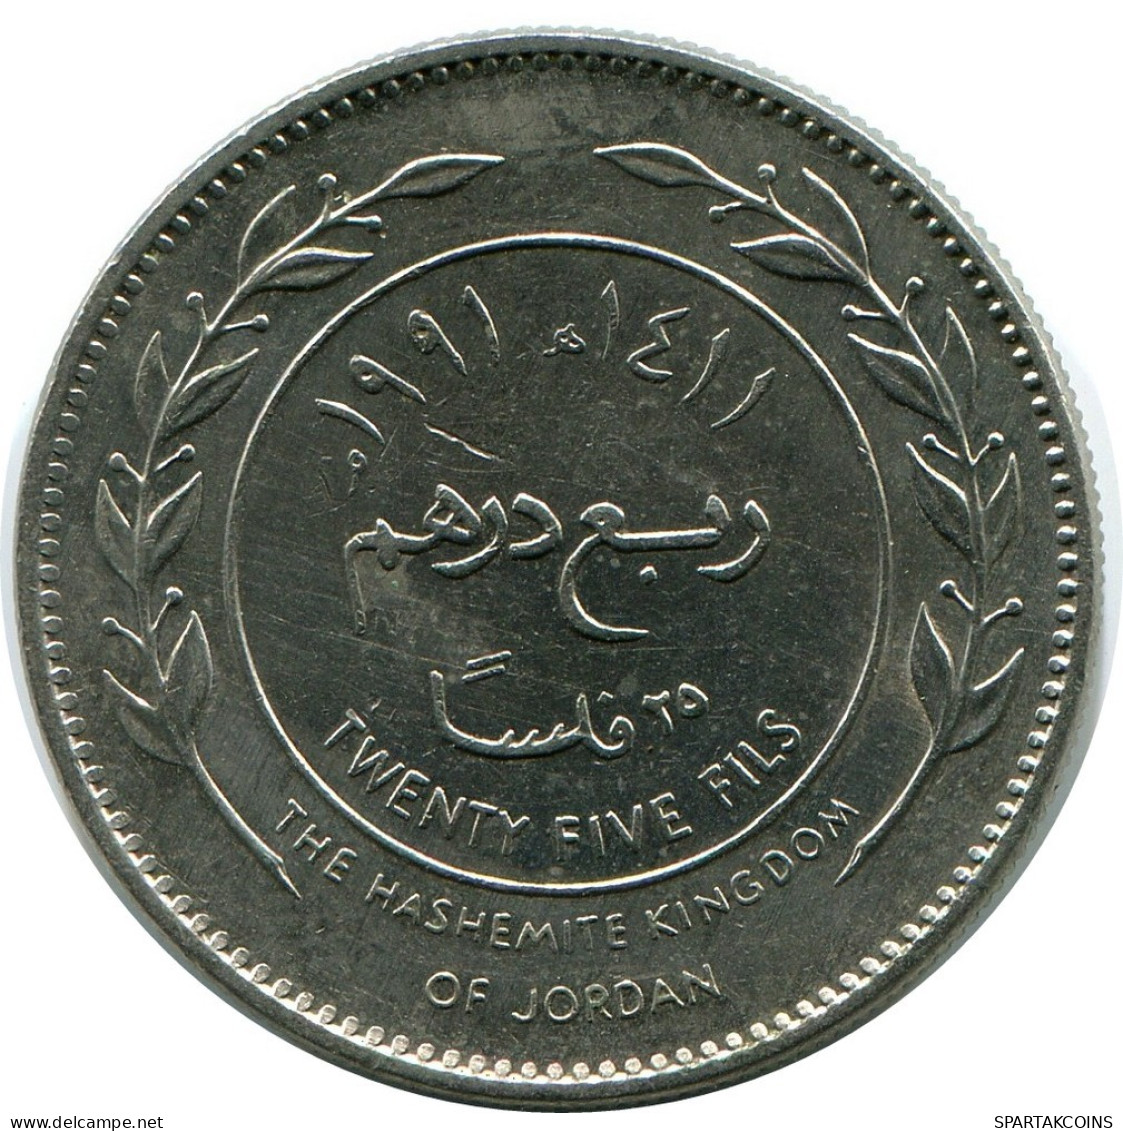 ¼ DIRHAM / 25 FILS 1991 JORDANIA JORDAN Moneda #AP082.E.A - Jordania